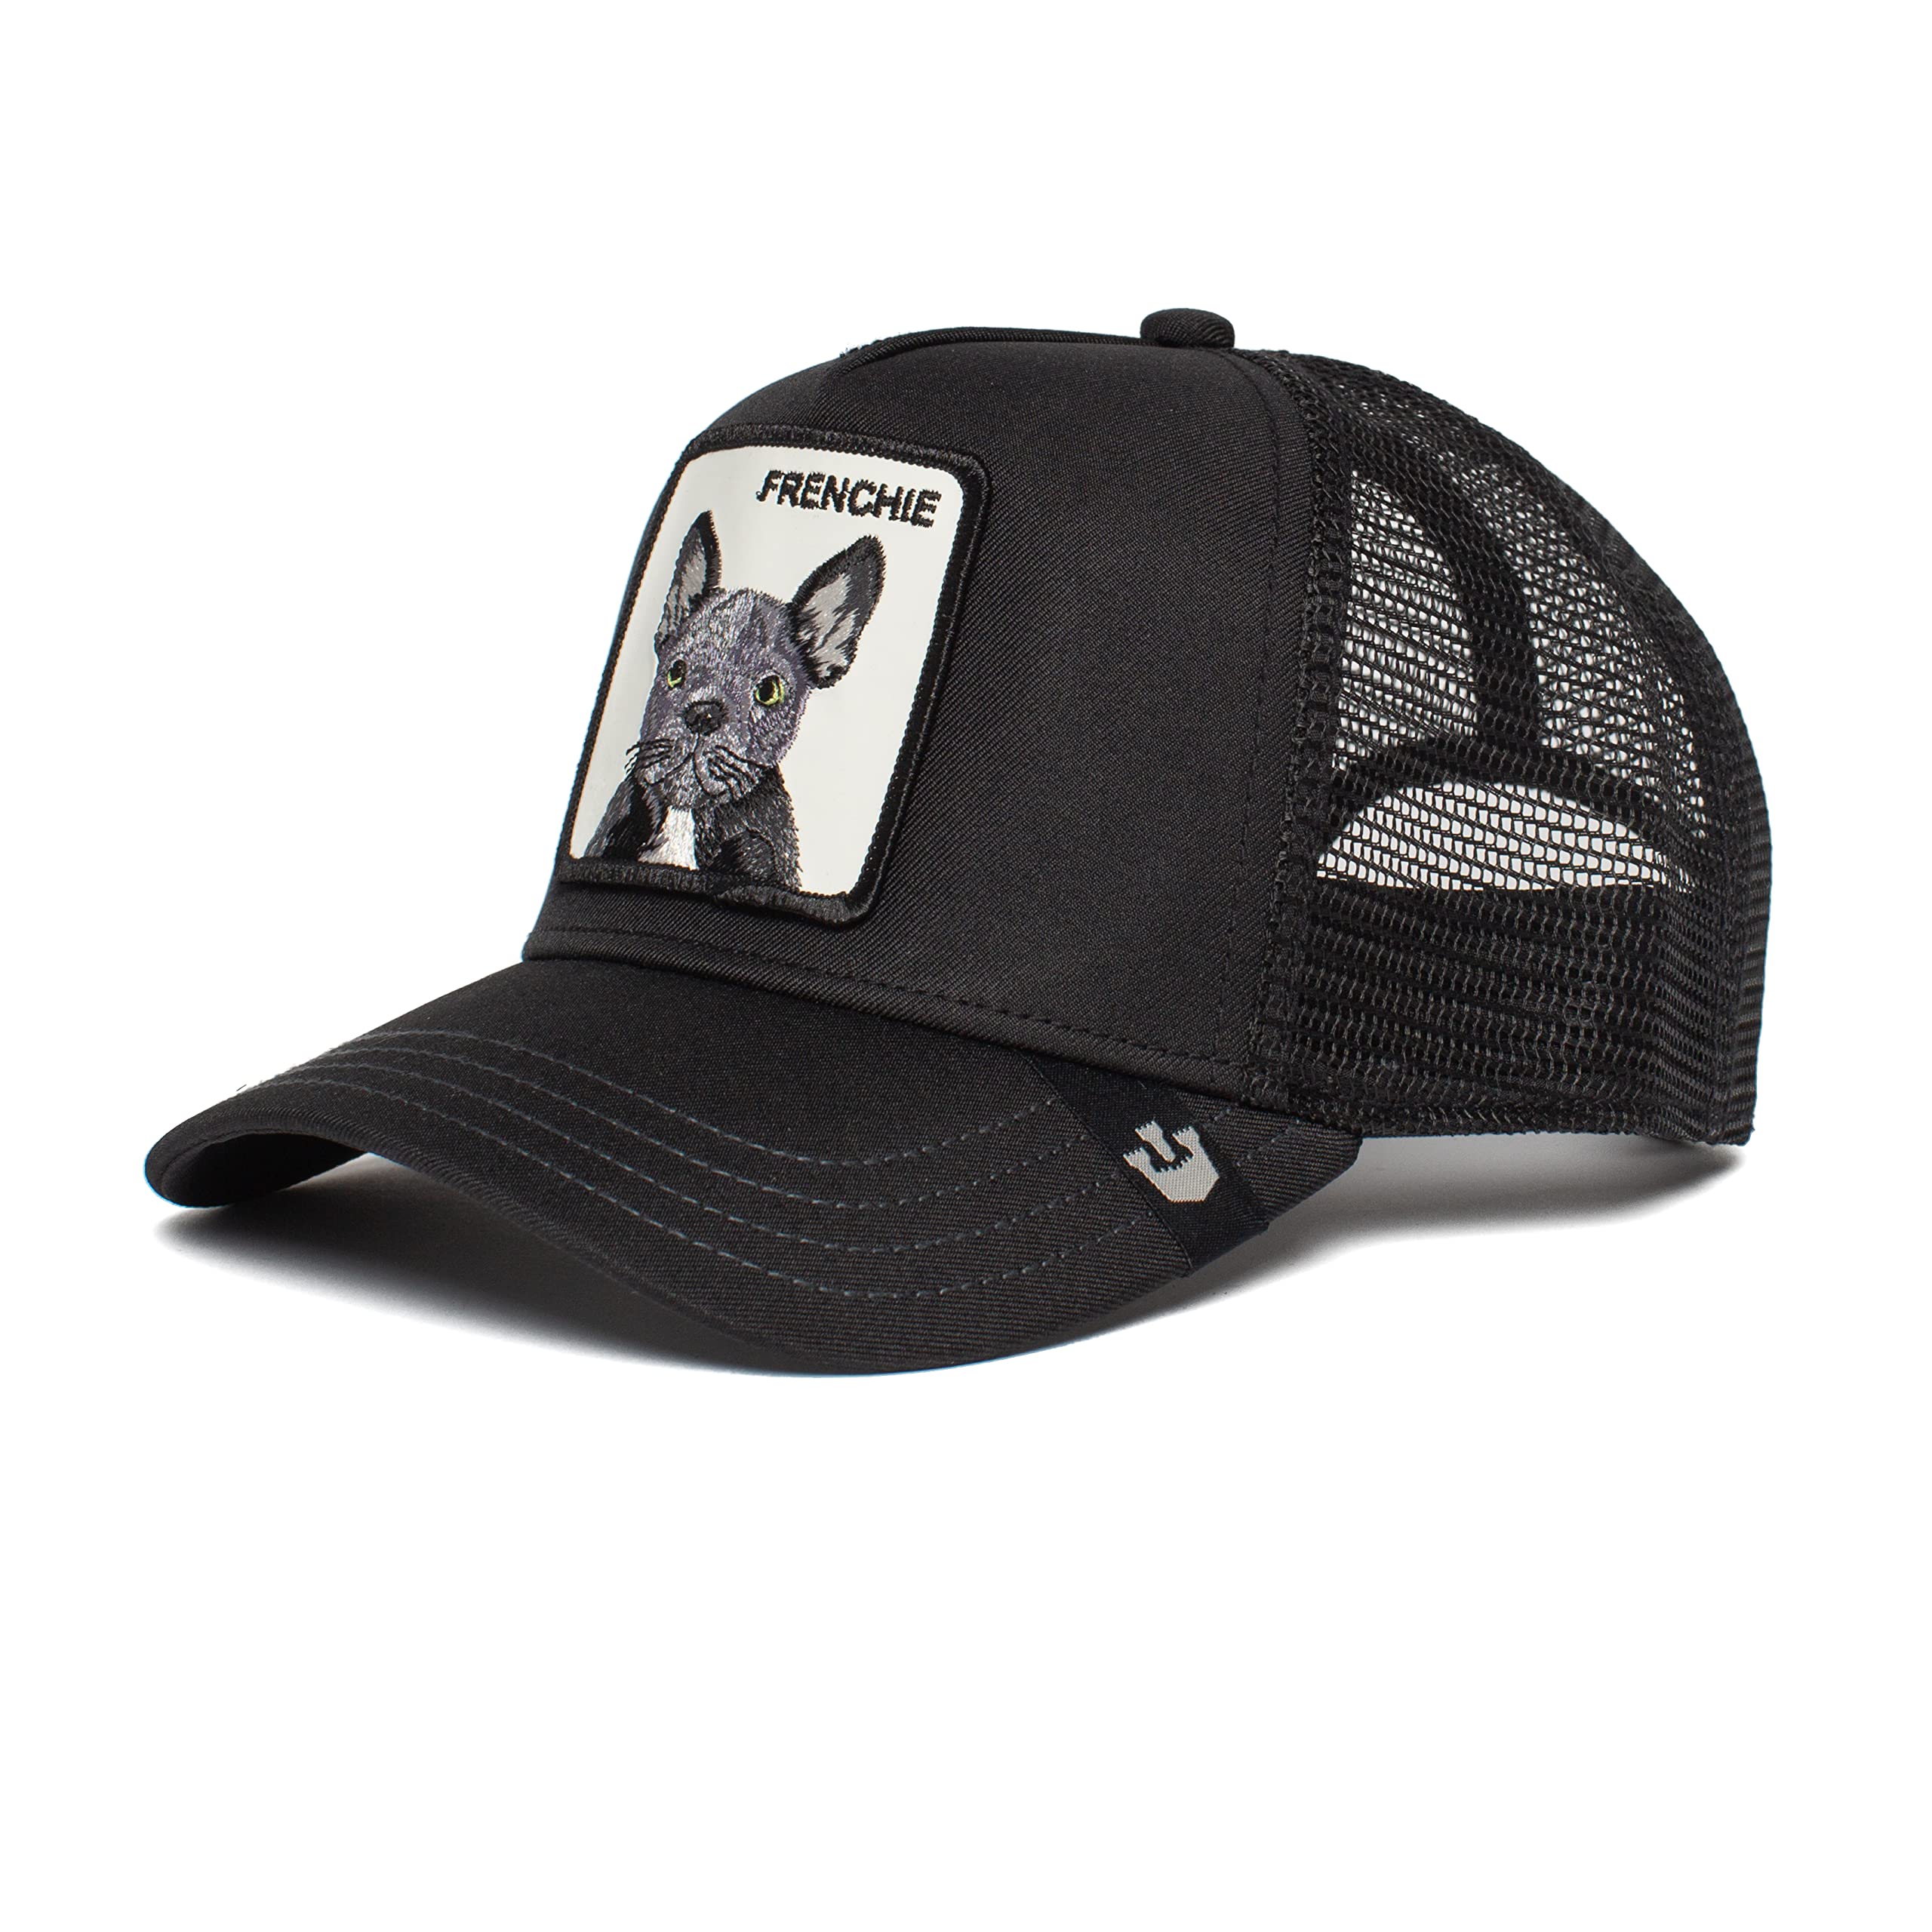 Goorin Bros. The Farm Unisex Original Adjustable Snapback Trucker Hat, Black (The Frenchie), One Size - Caps Fitted Caps Fitted Goorin Bros.